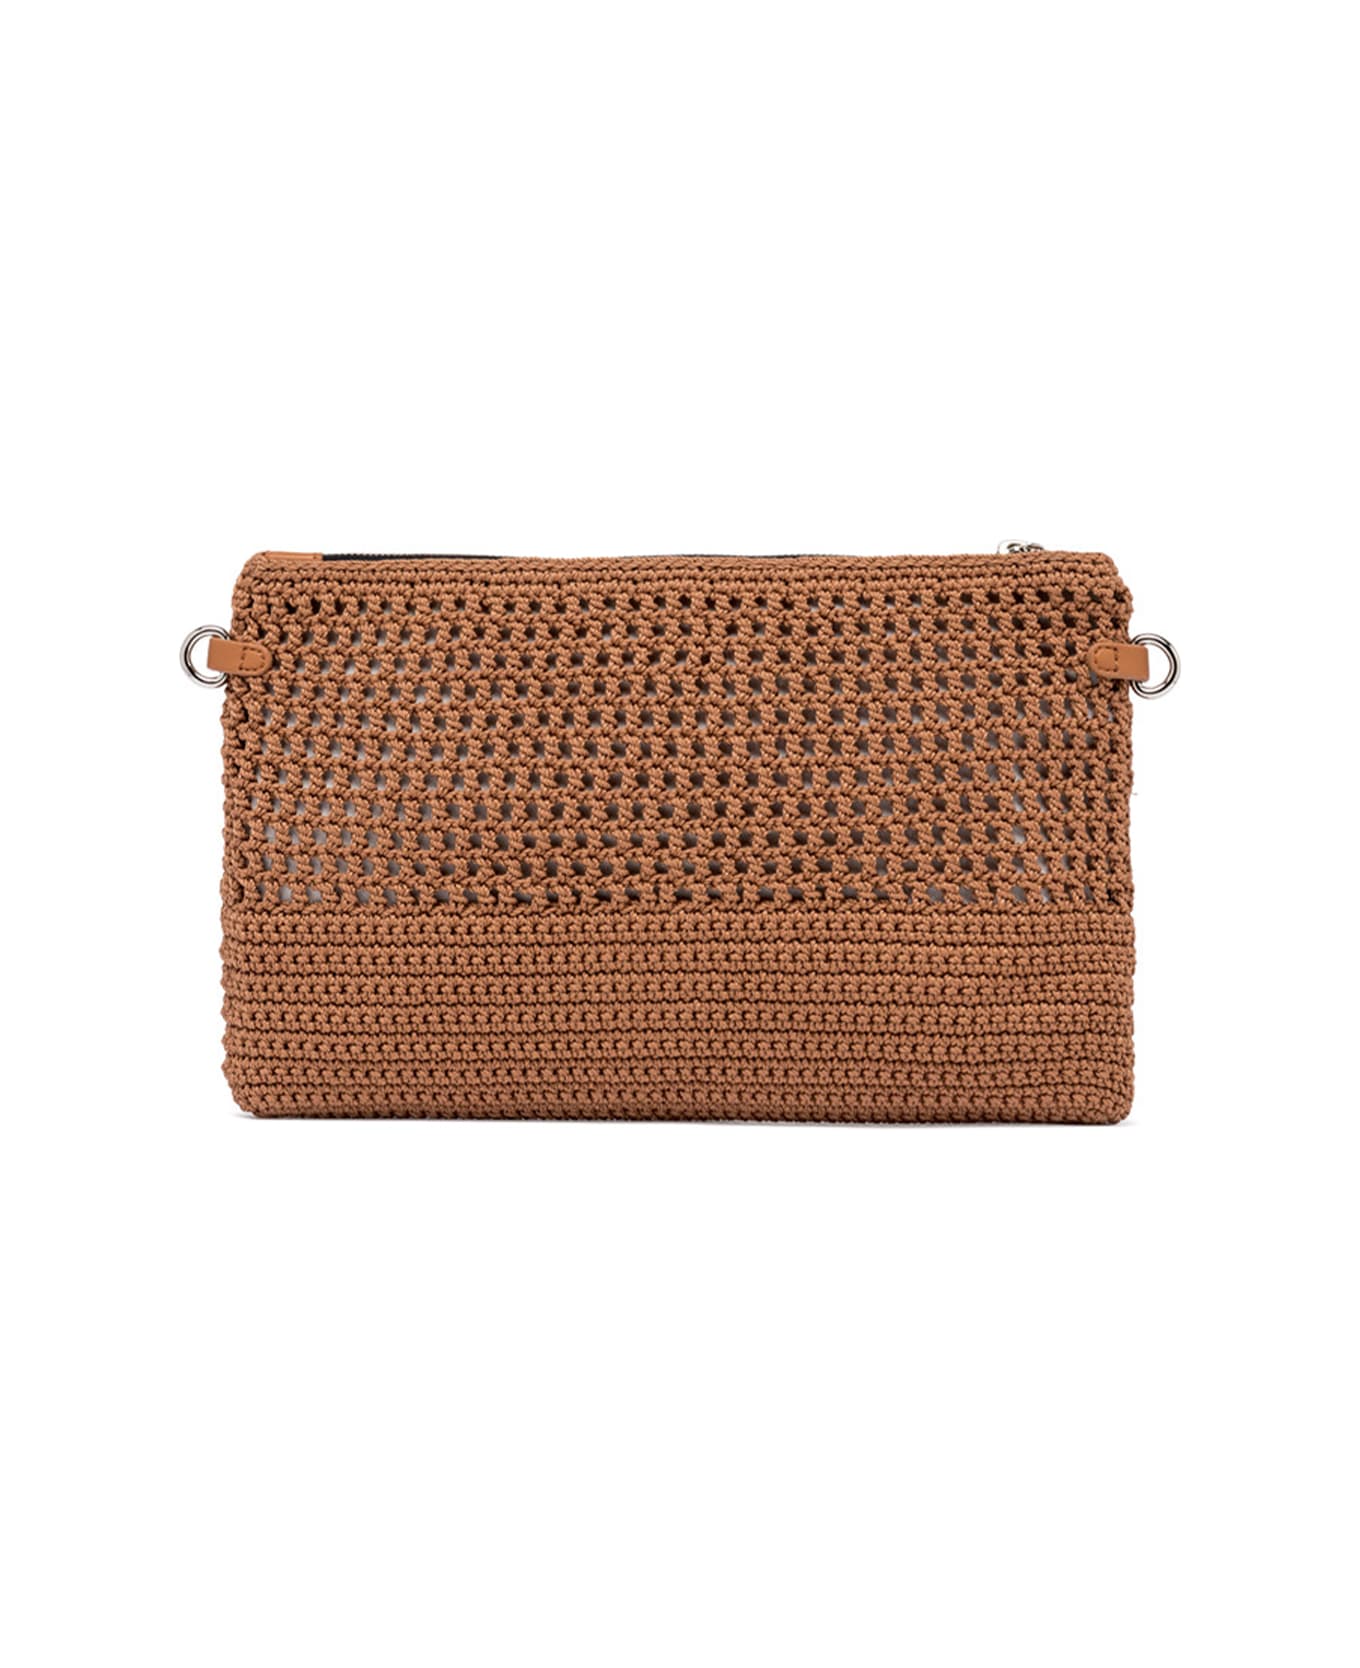 Gianni Chiarini Victoria Leather Clutch Bag In Crochet Fabric - COPPER